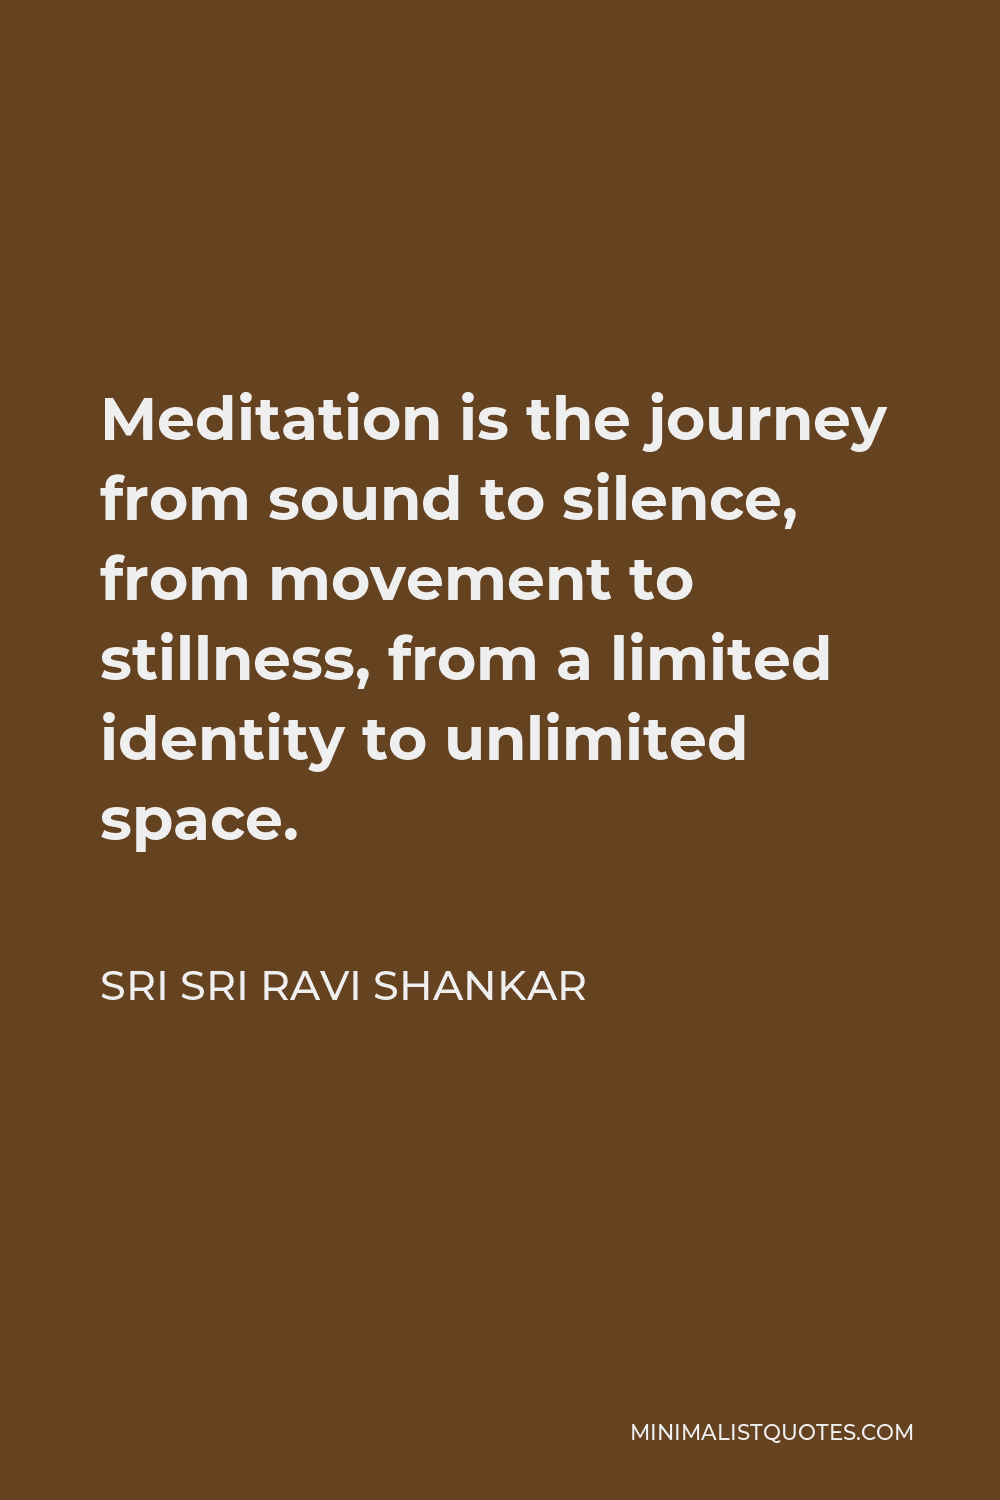 Sri Sri Ravi Shankar Quote: Meditation is the journey from sound ...